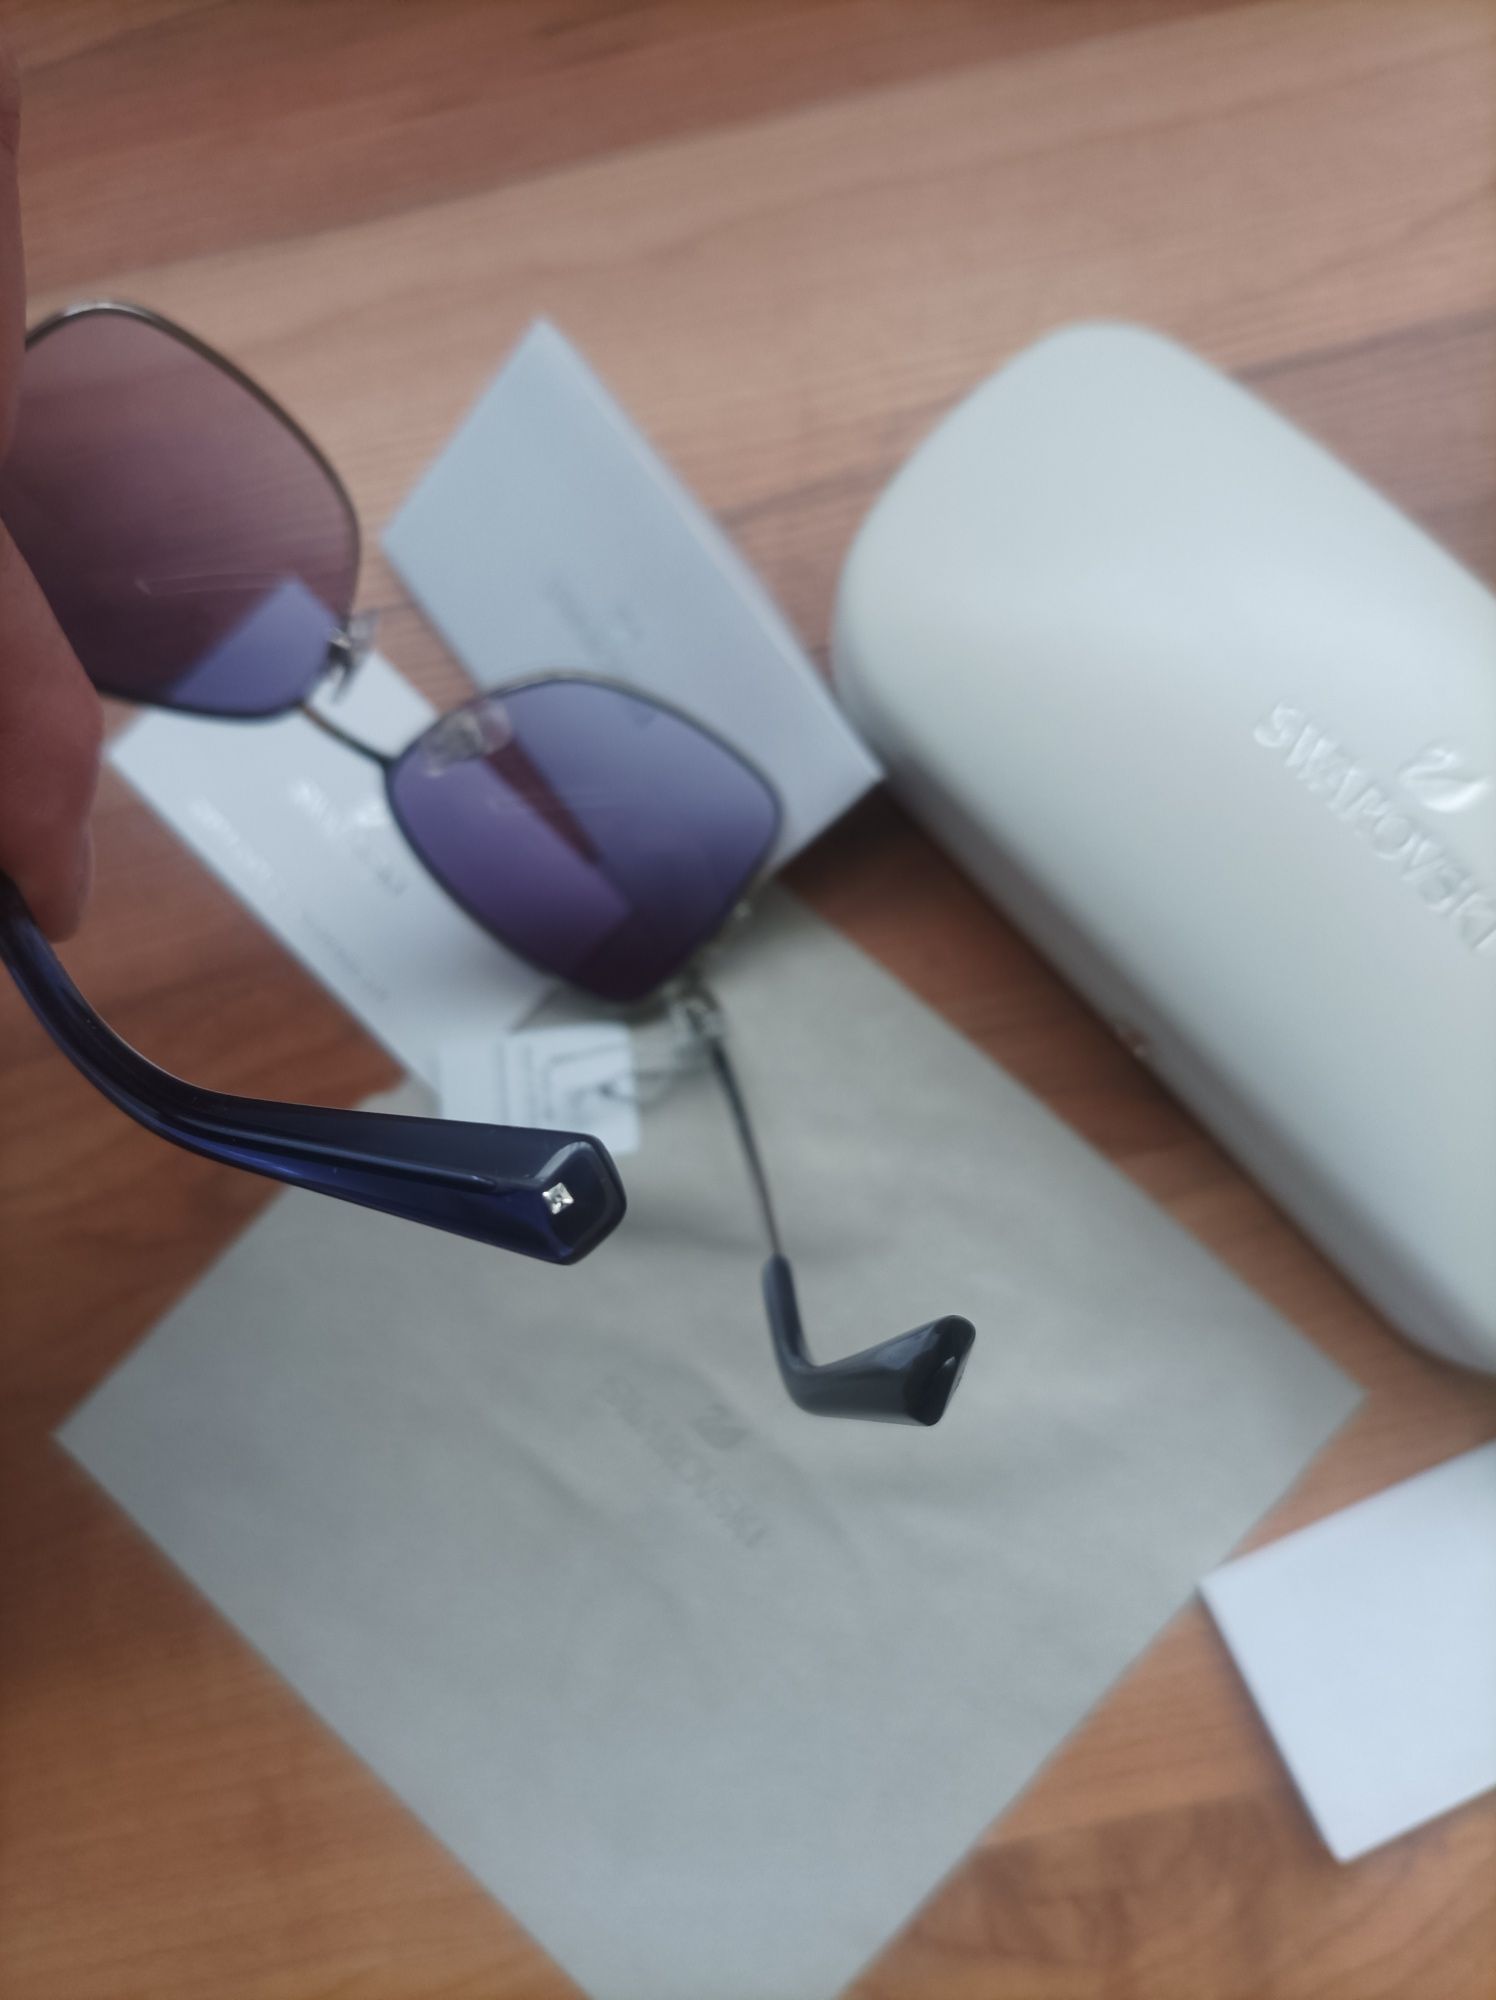 Swarovski нови оригинални слънчеви очила